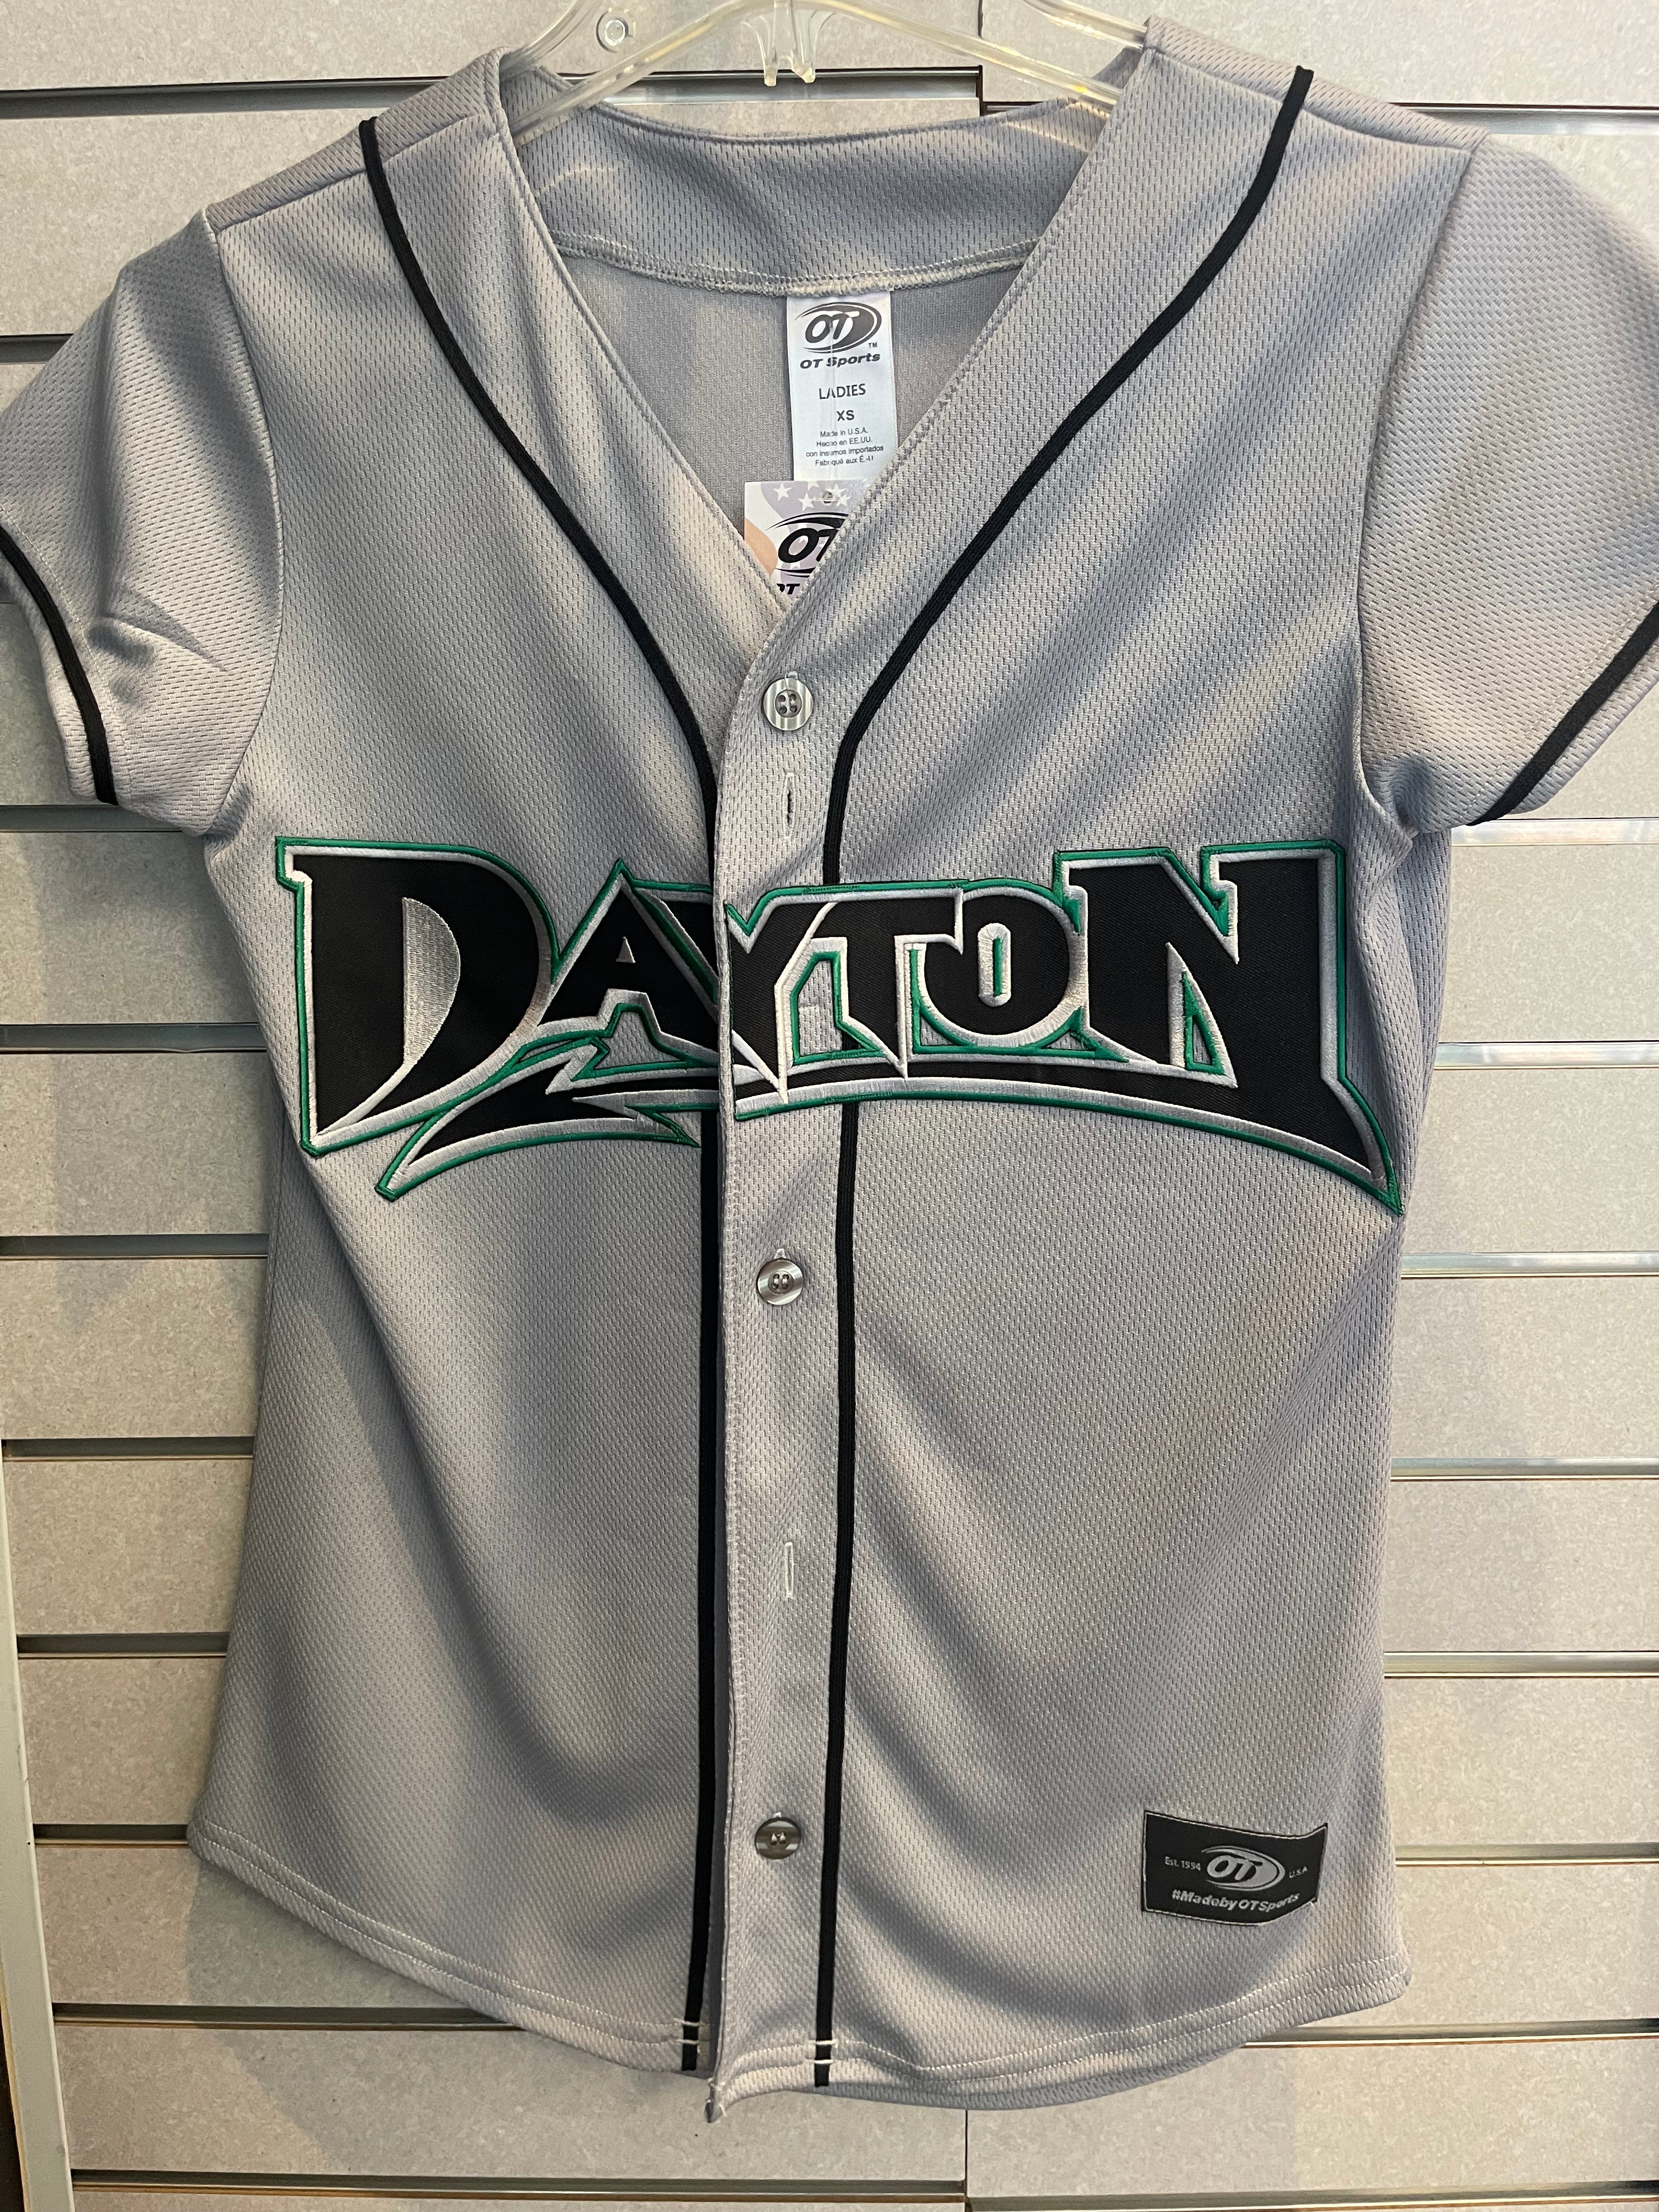 Brand new Arizona diamondbacks jersey size Large for $100